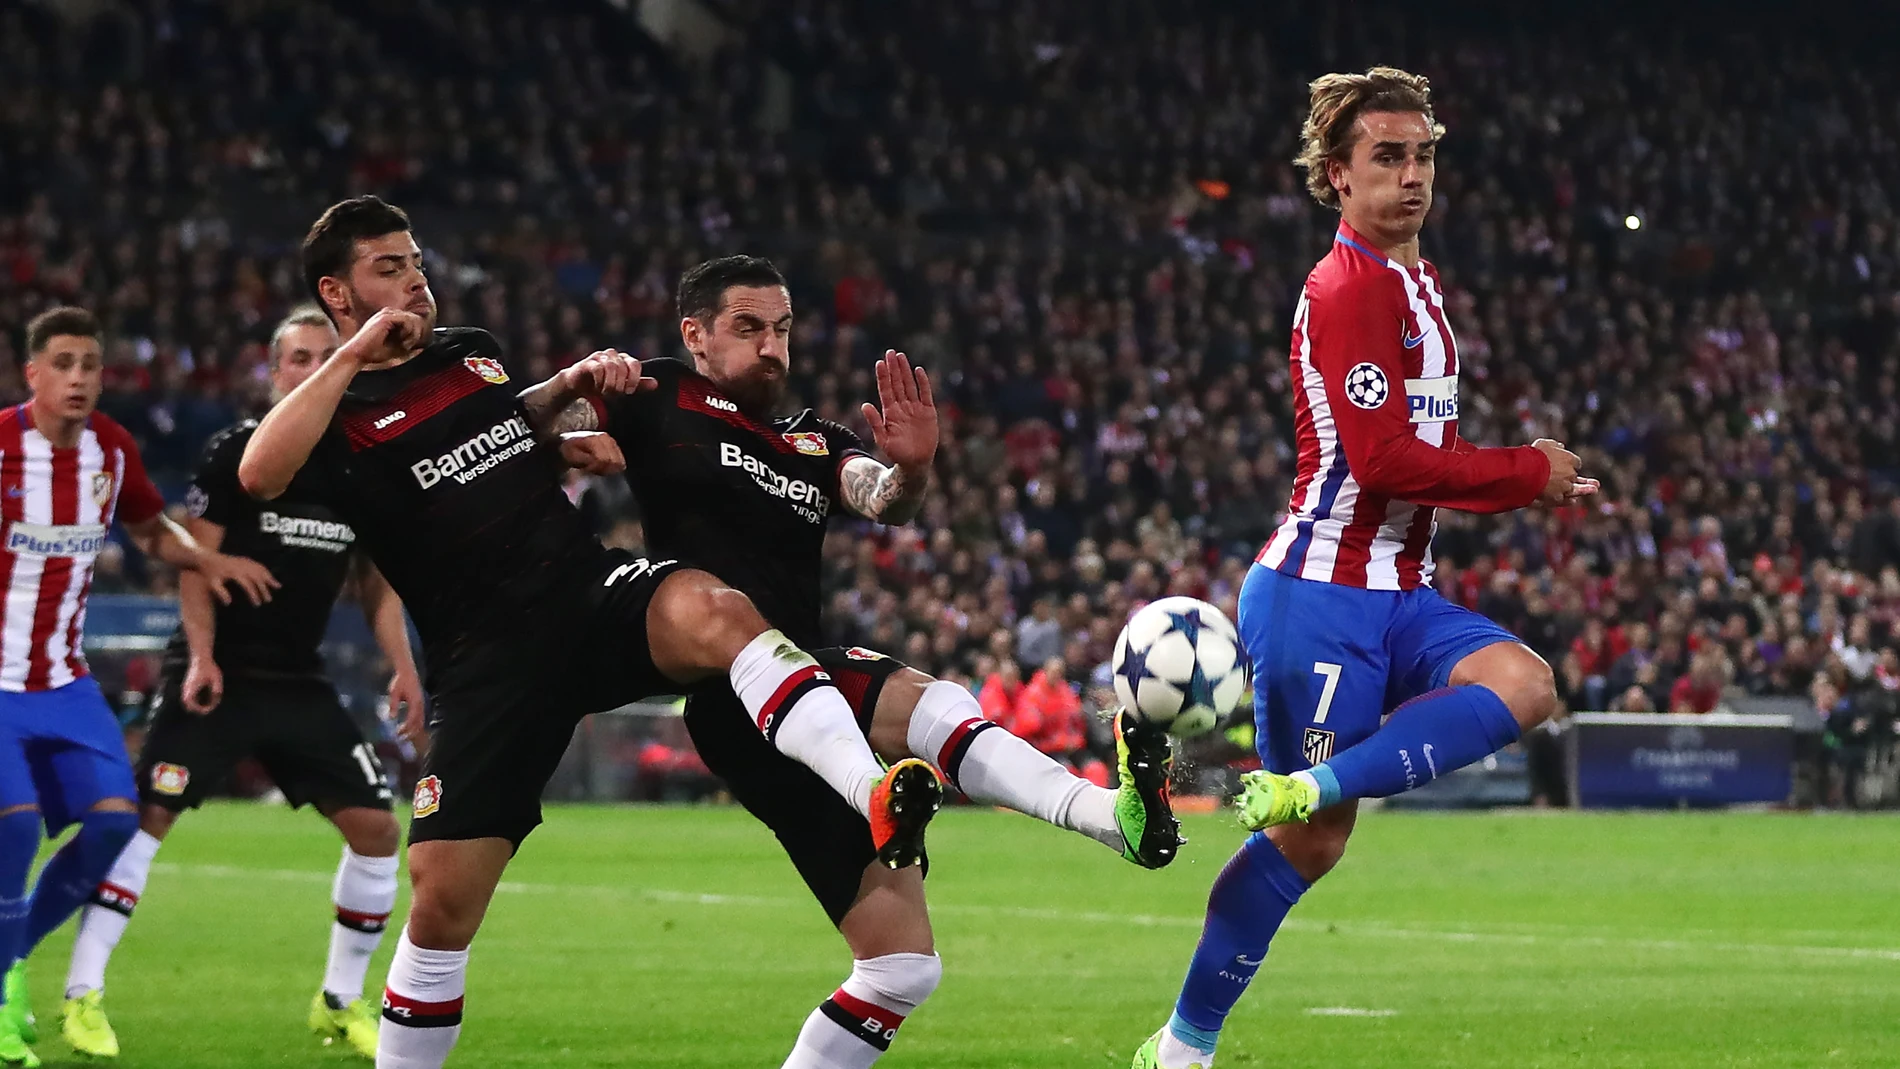 Griezmann trata de rematar ante la defensa del Leverkusen